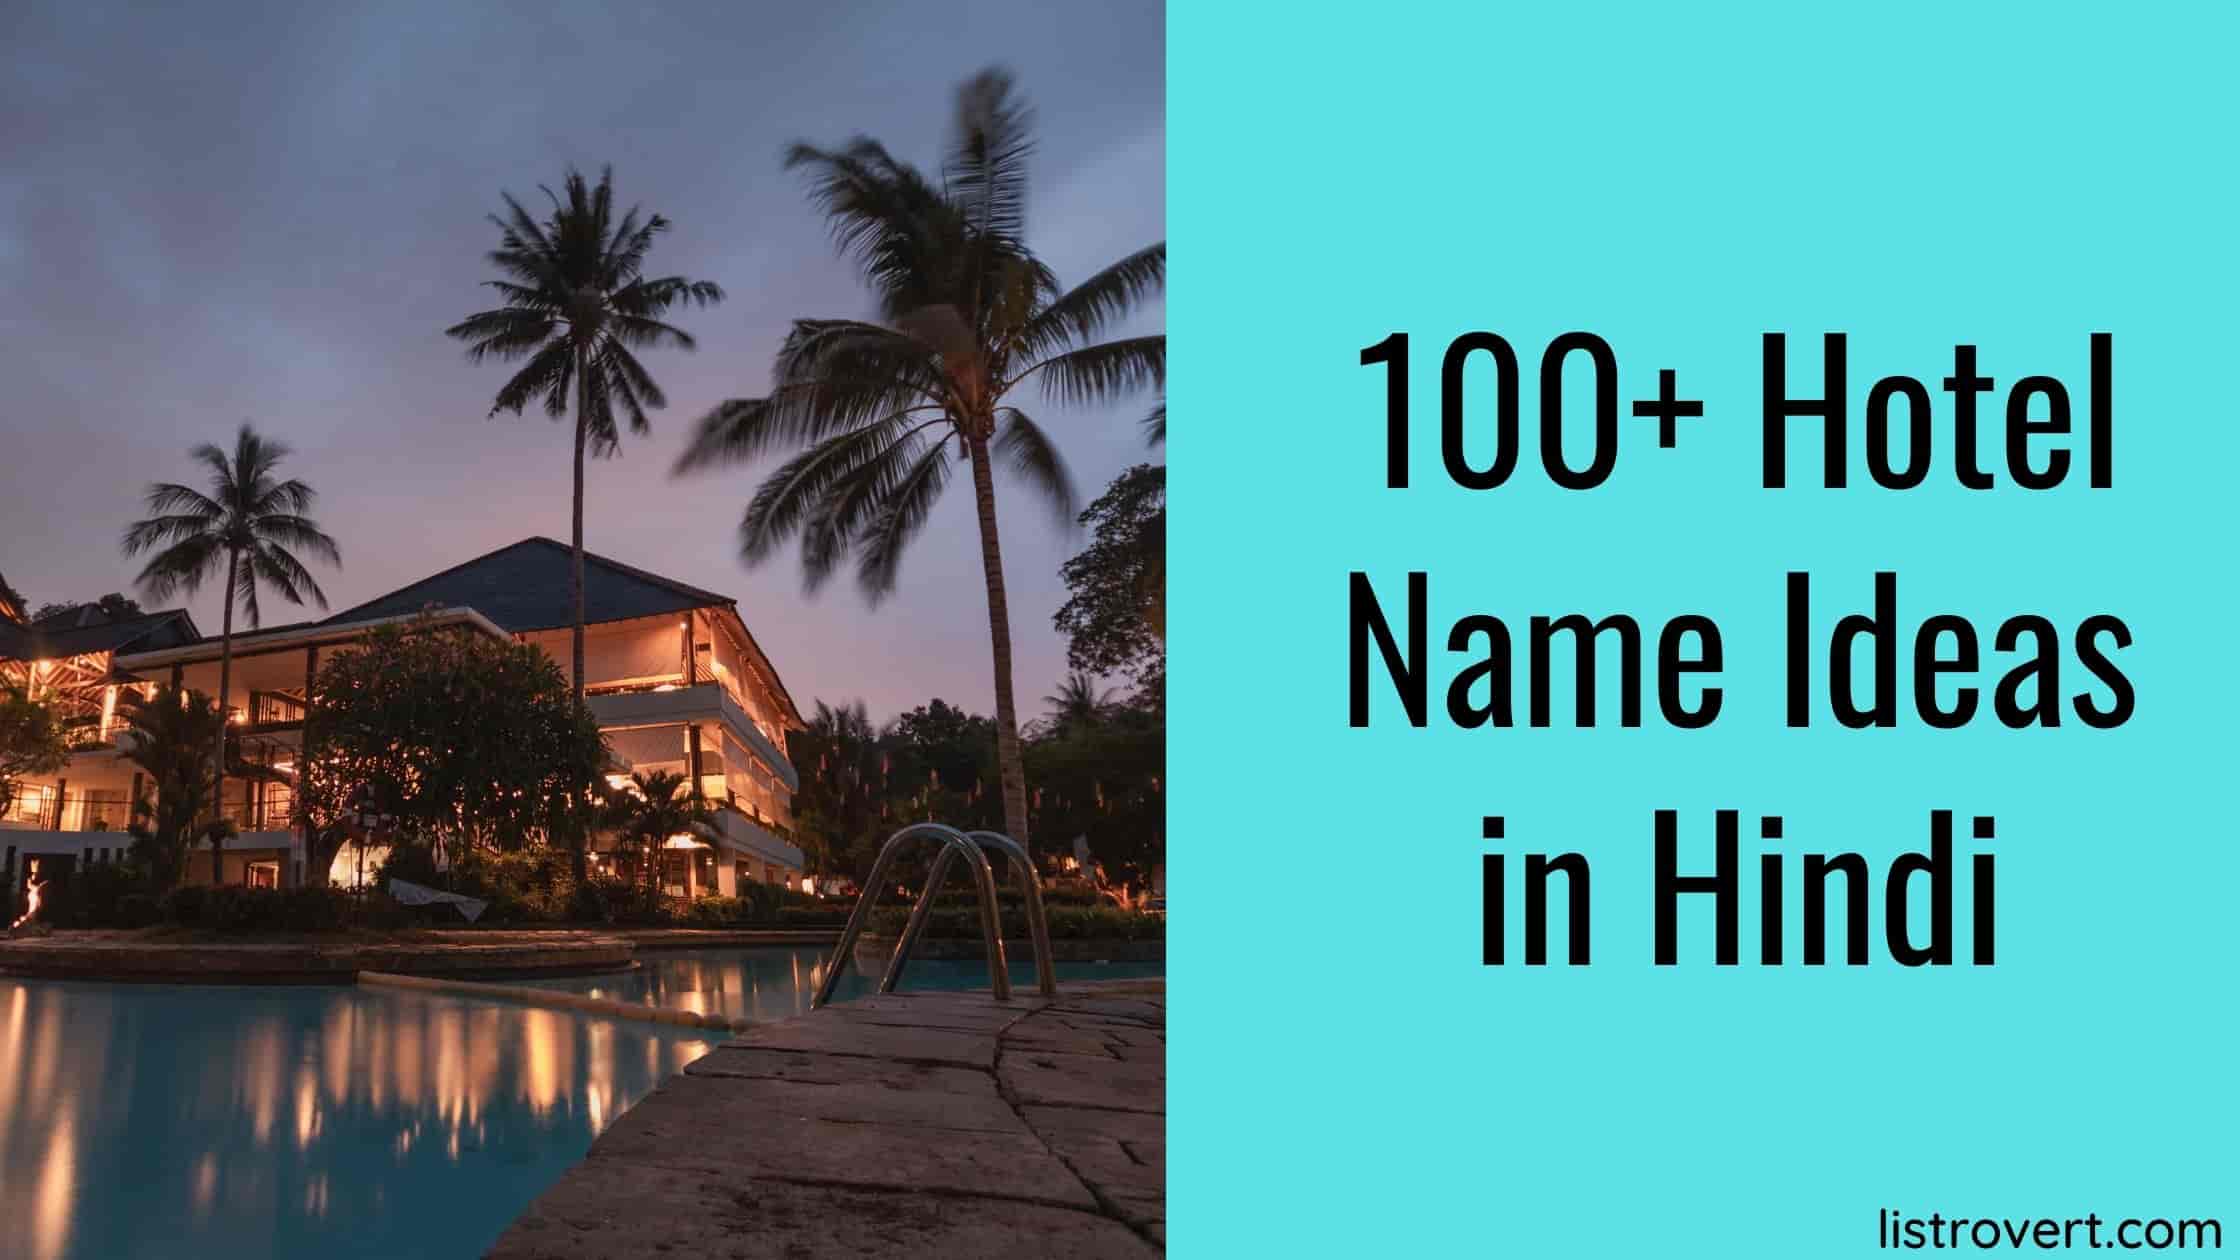 Hotel name ideas in Hindi